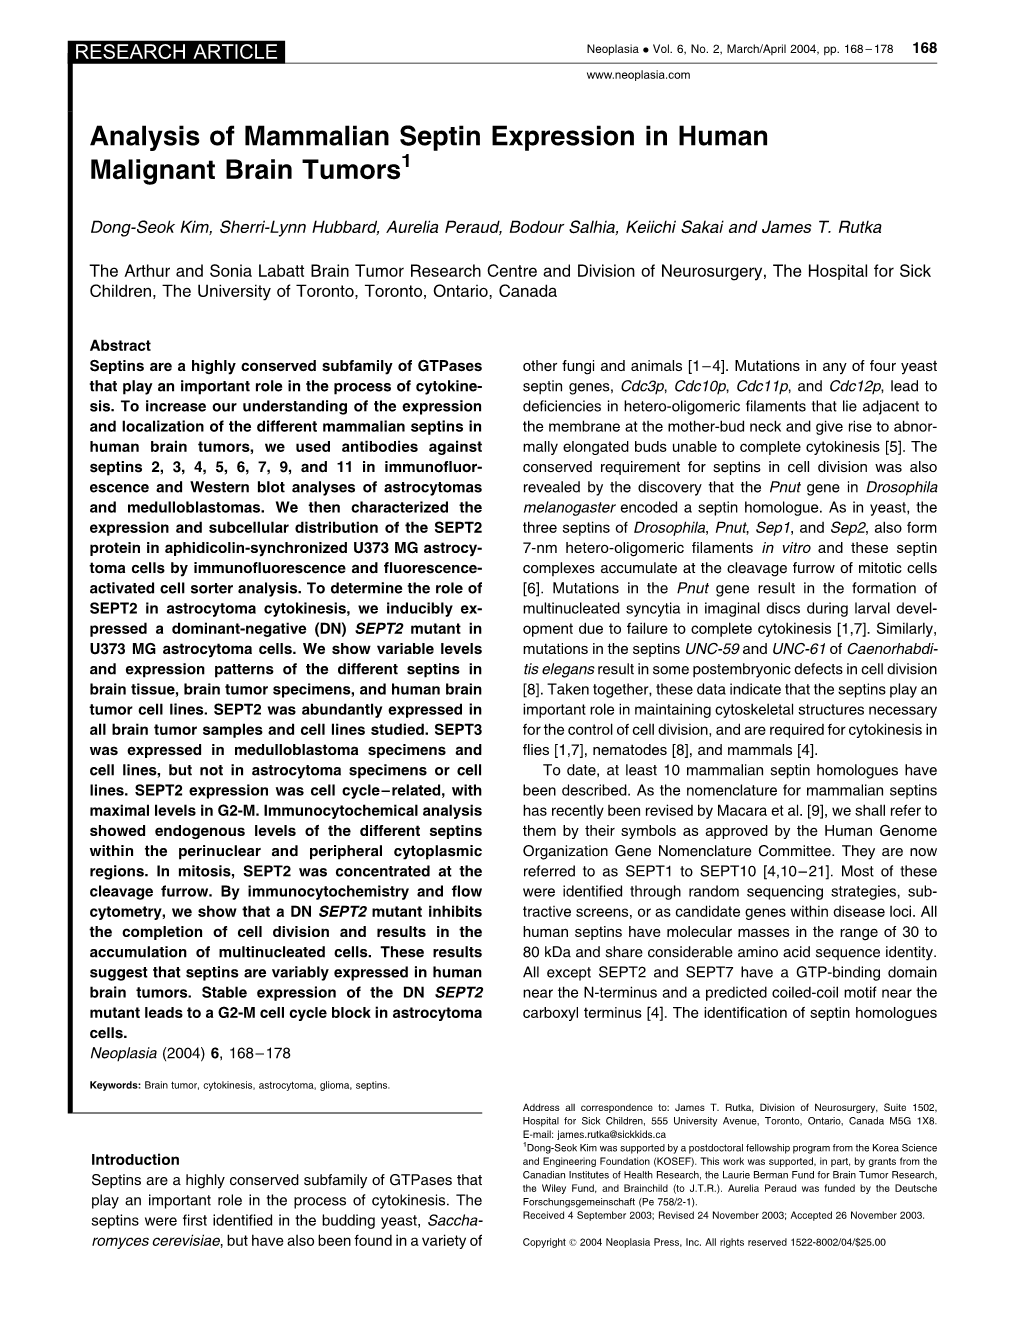 Analysis of Mammalian Septin Expression in Human Malignant Brain Tumors1